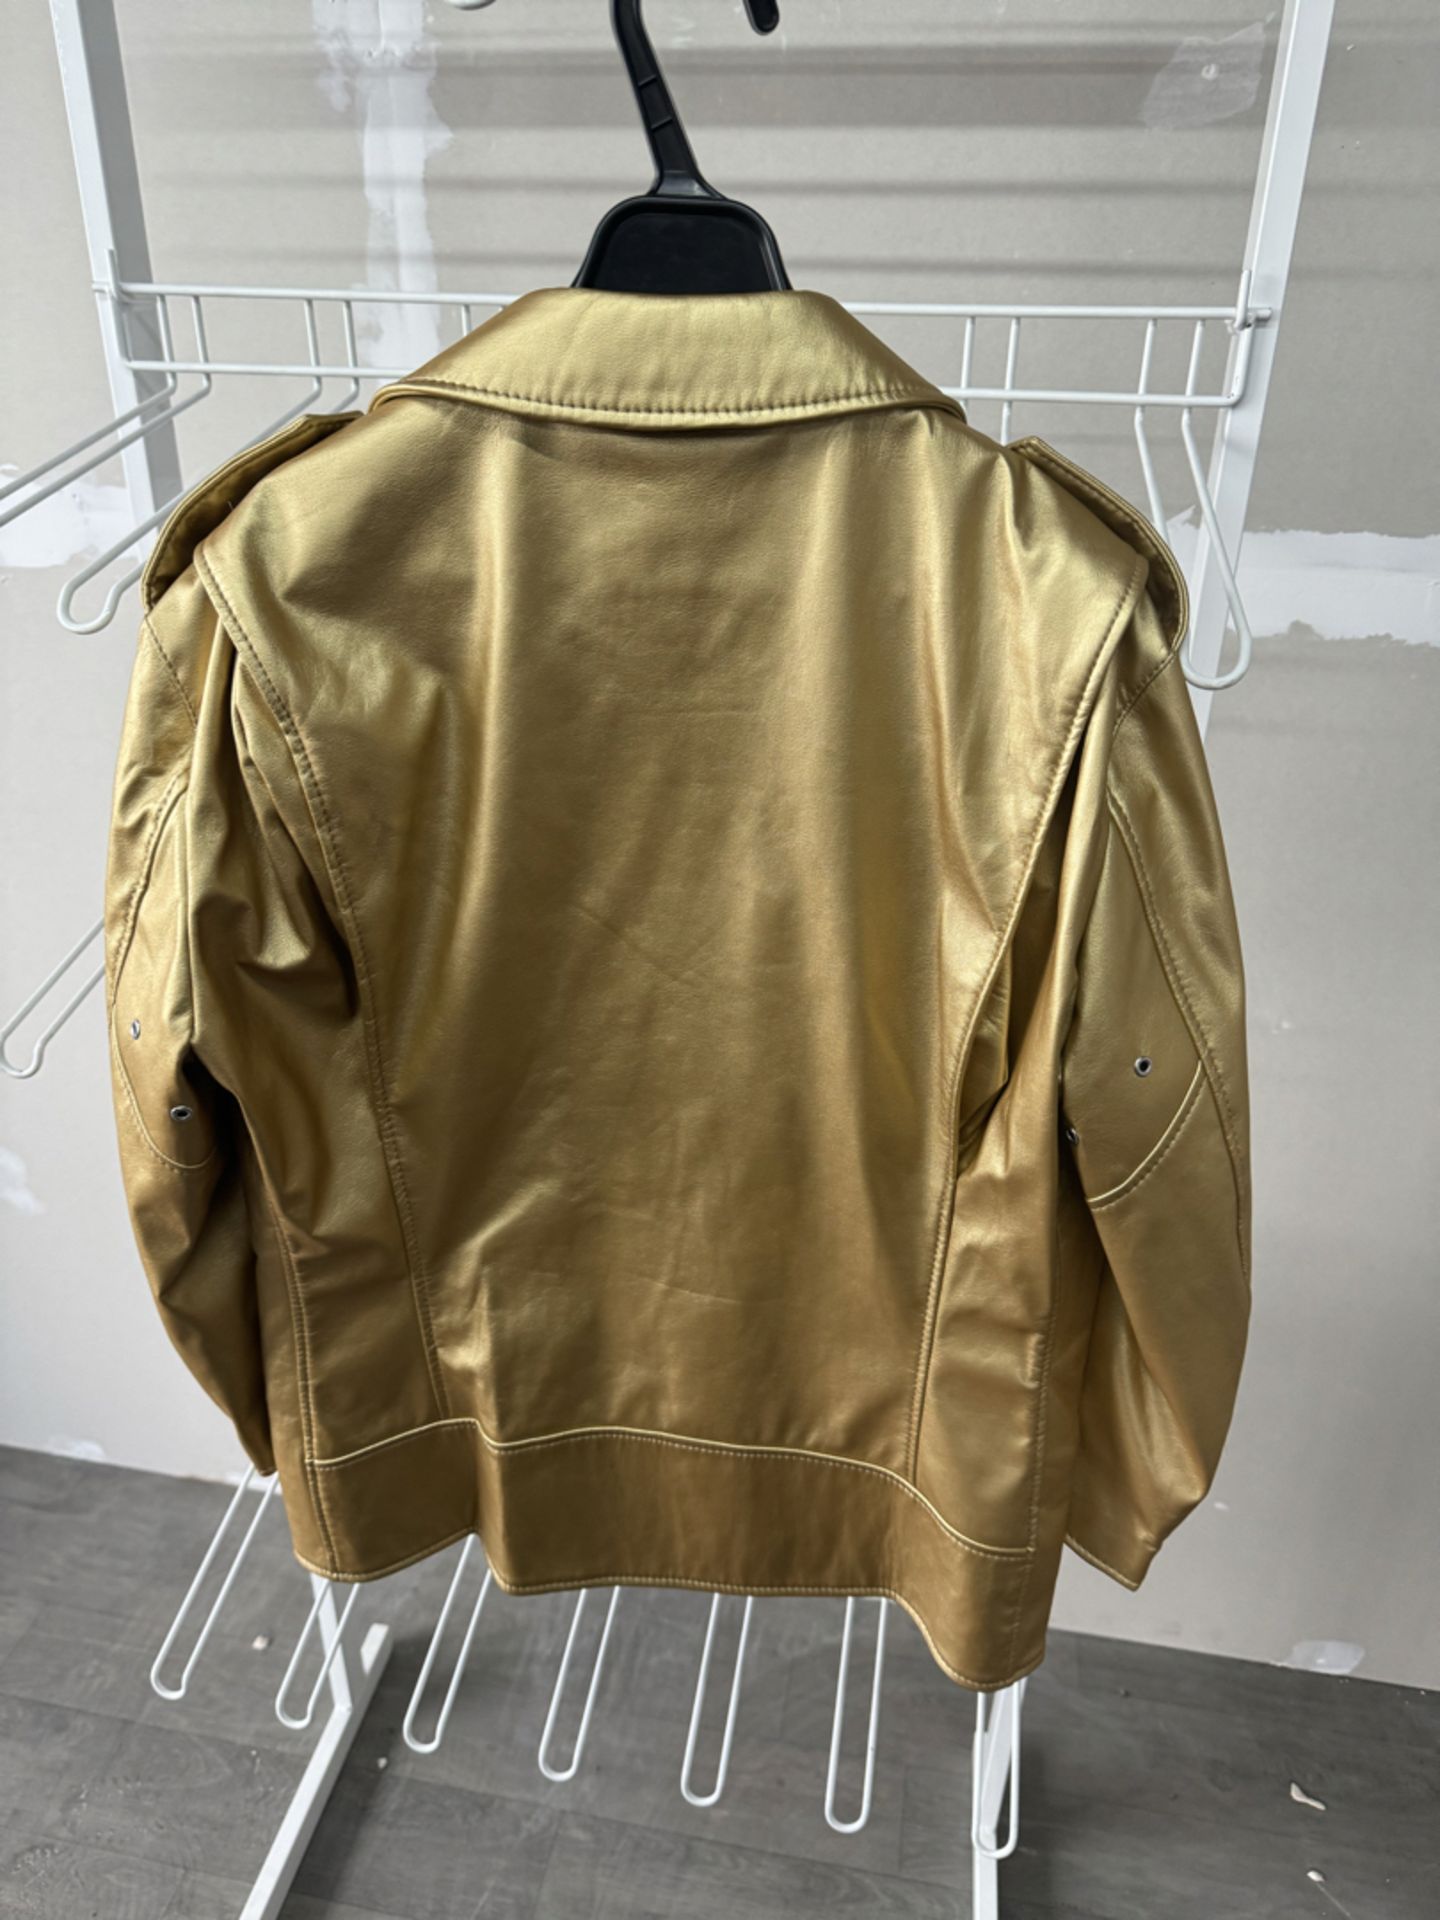 Comme Des GarÃ§ons Ladies Gold Jacket - New with Tags - Size Medium - RRP Â£520  - NO VAT! - Image 3 of 6